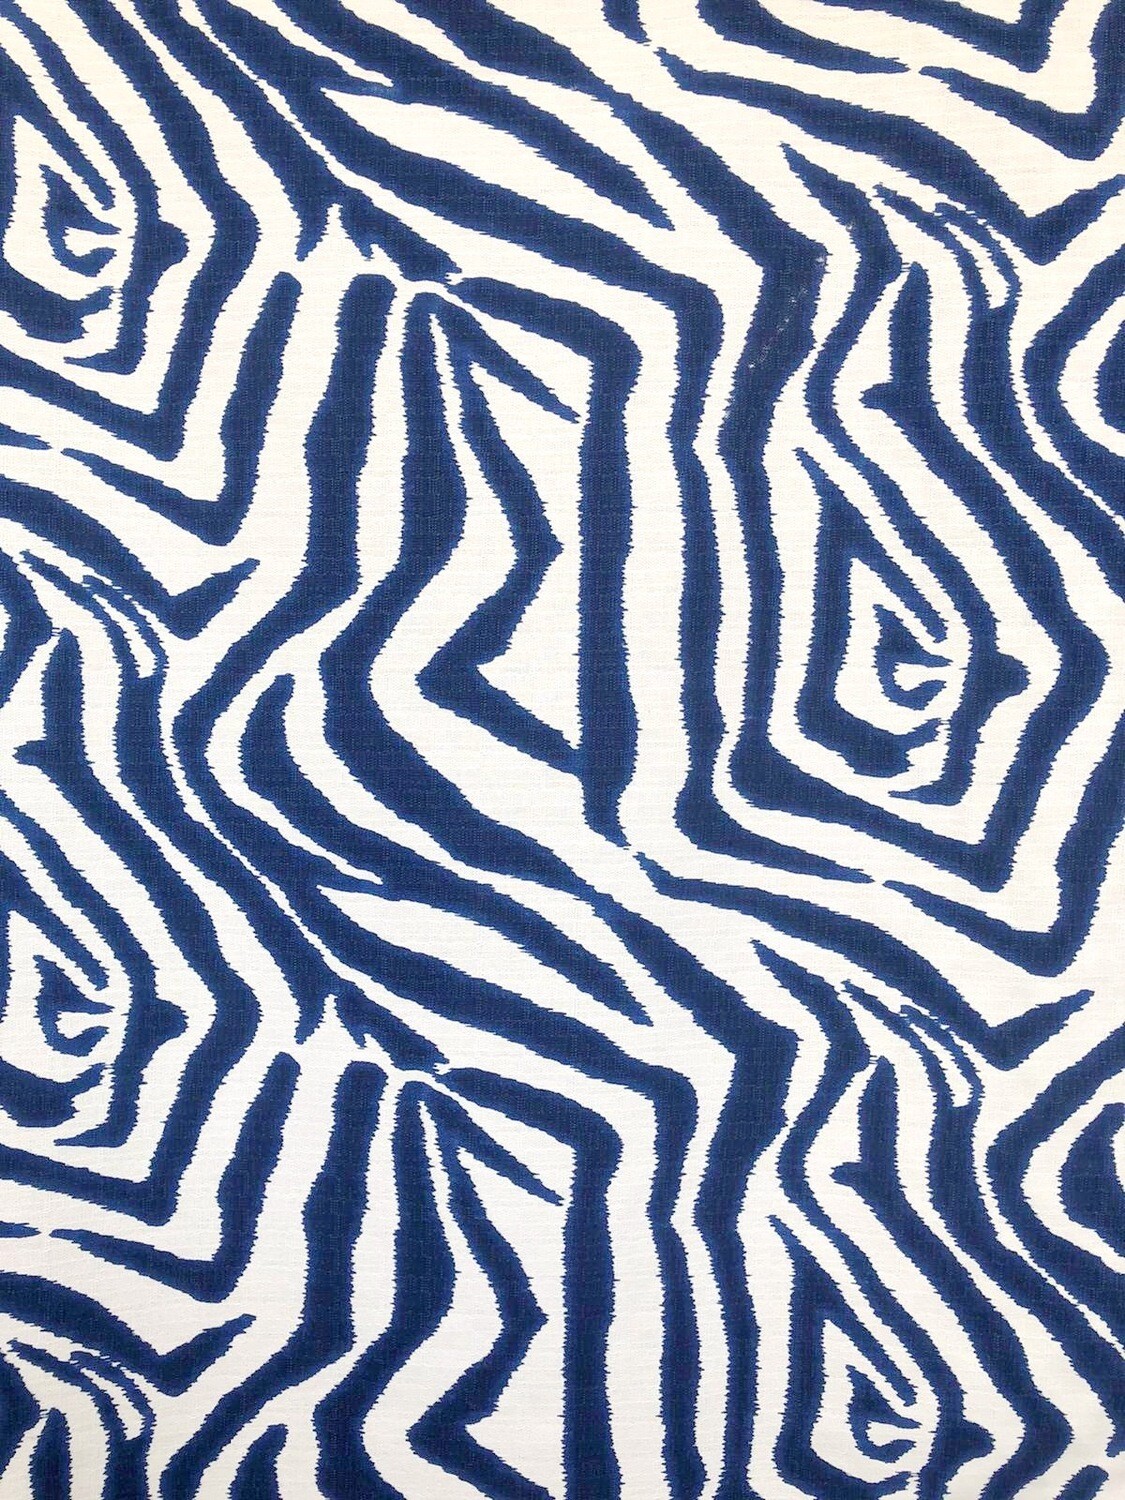 Indigo Zebra Fabric By The Yard